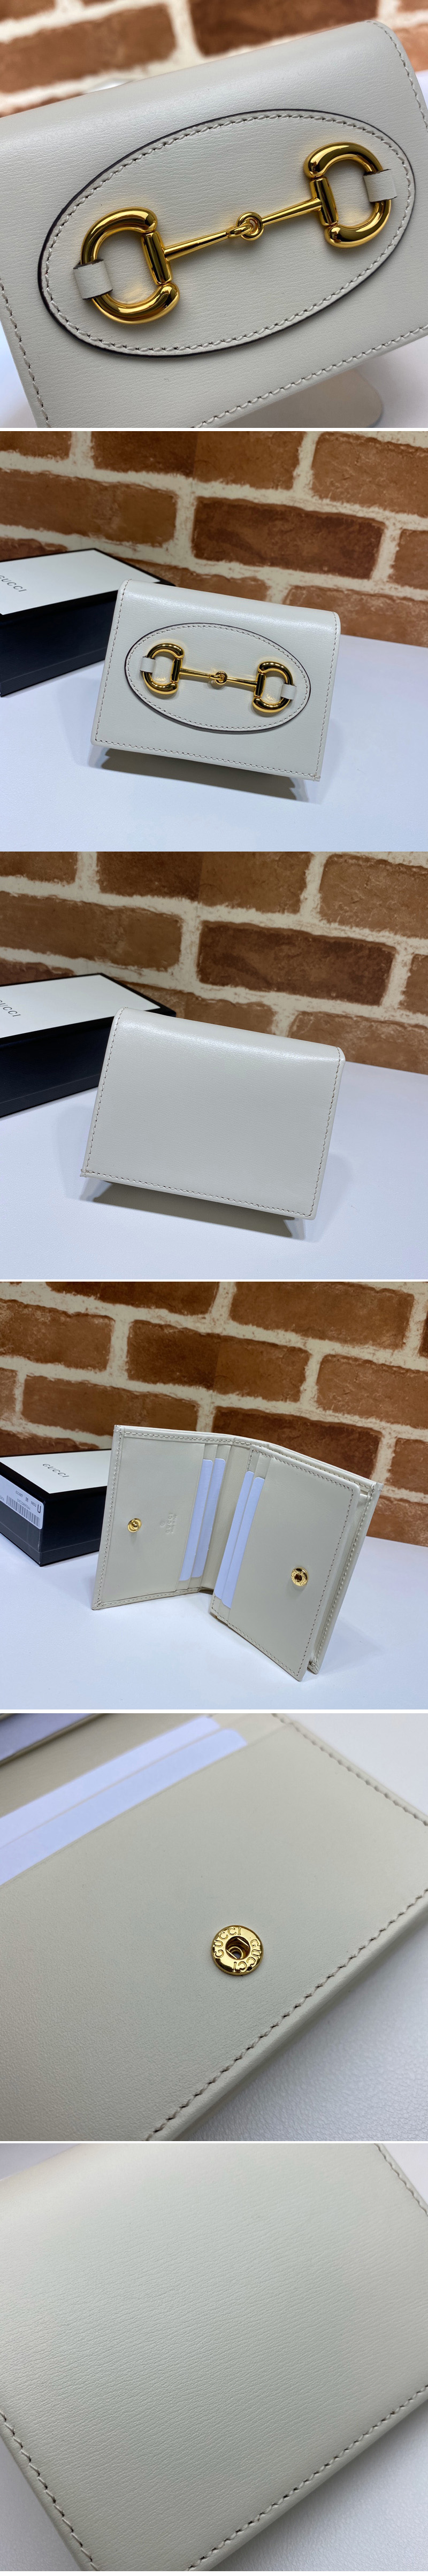 Replica Gucci 621892 Gucci 1955 Horsebit card case wallet in White leather